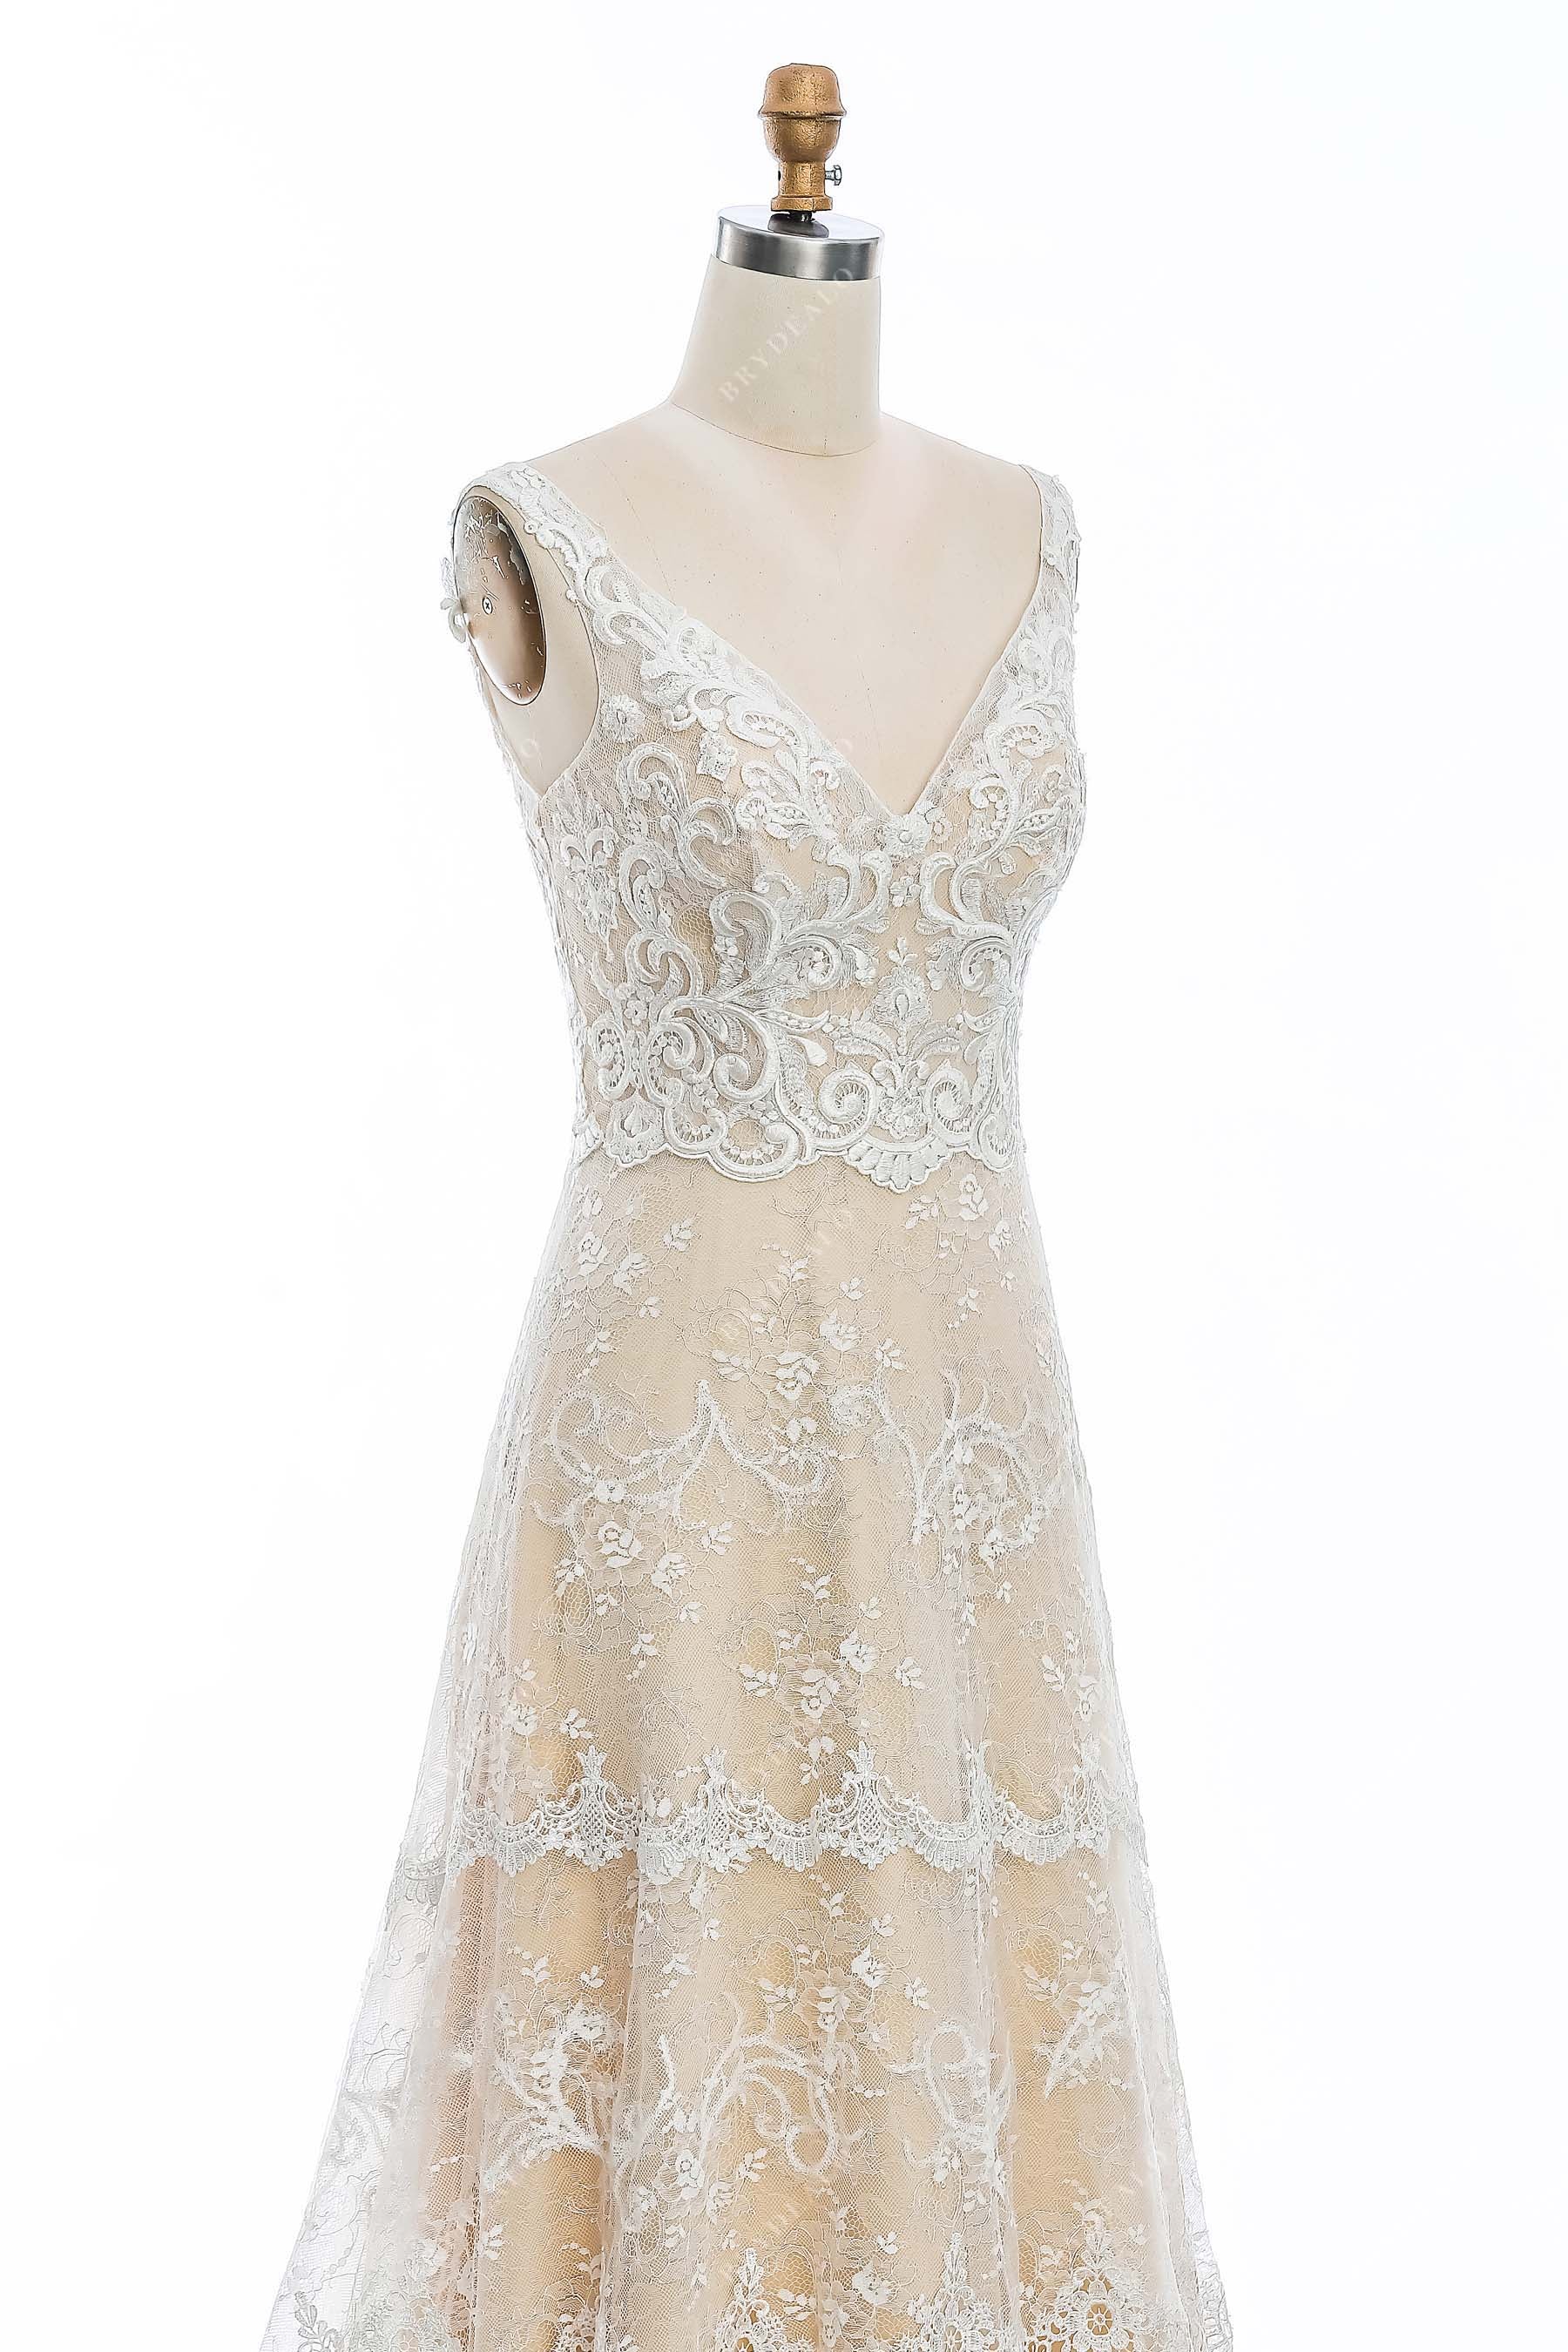 V-neck lace sleeveless wedding gown